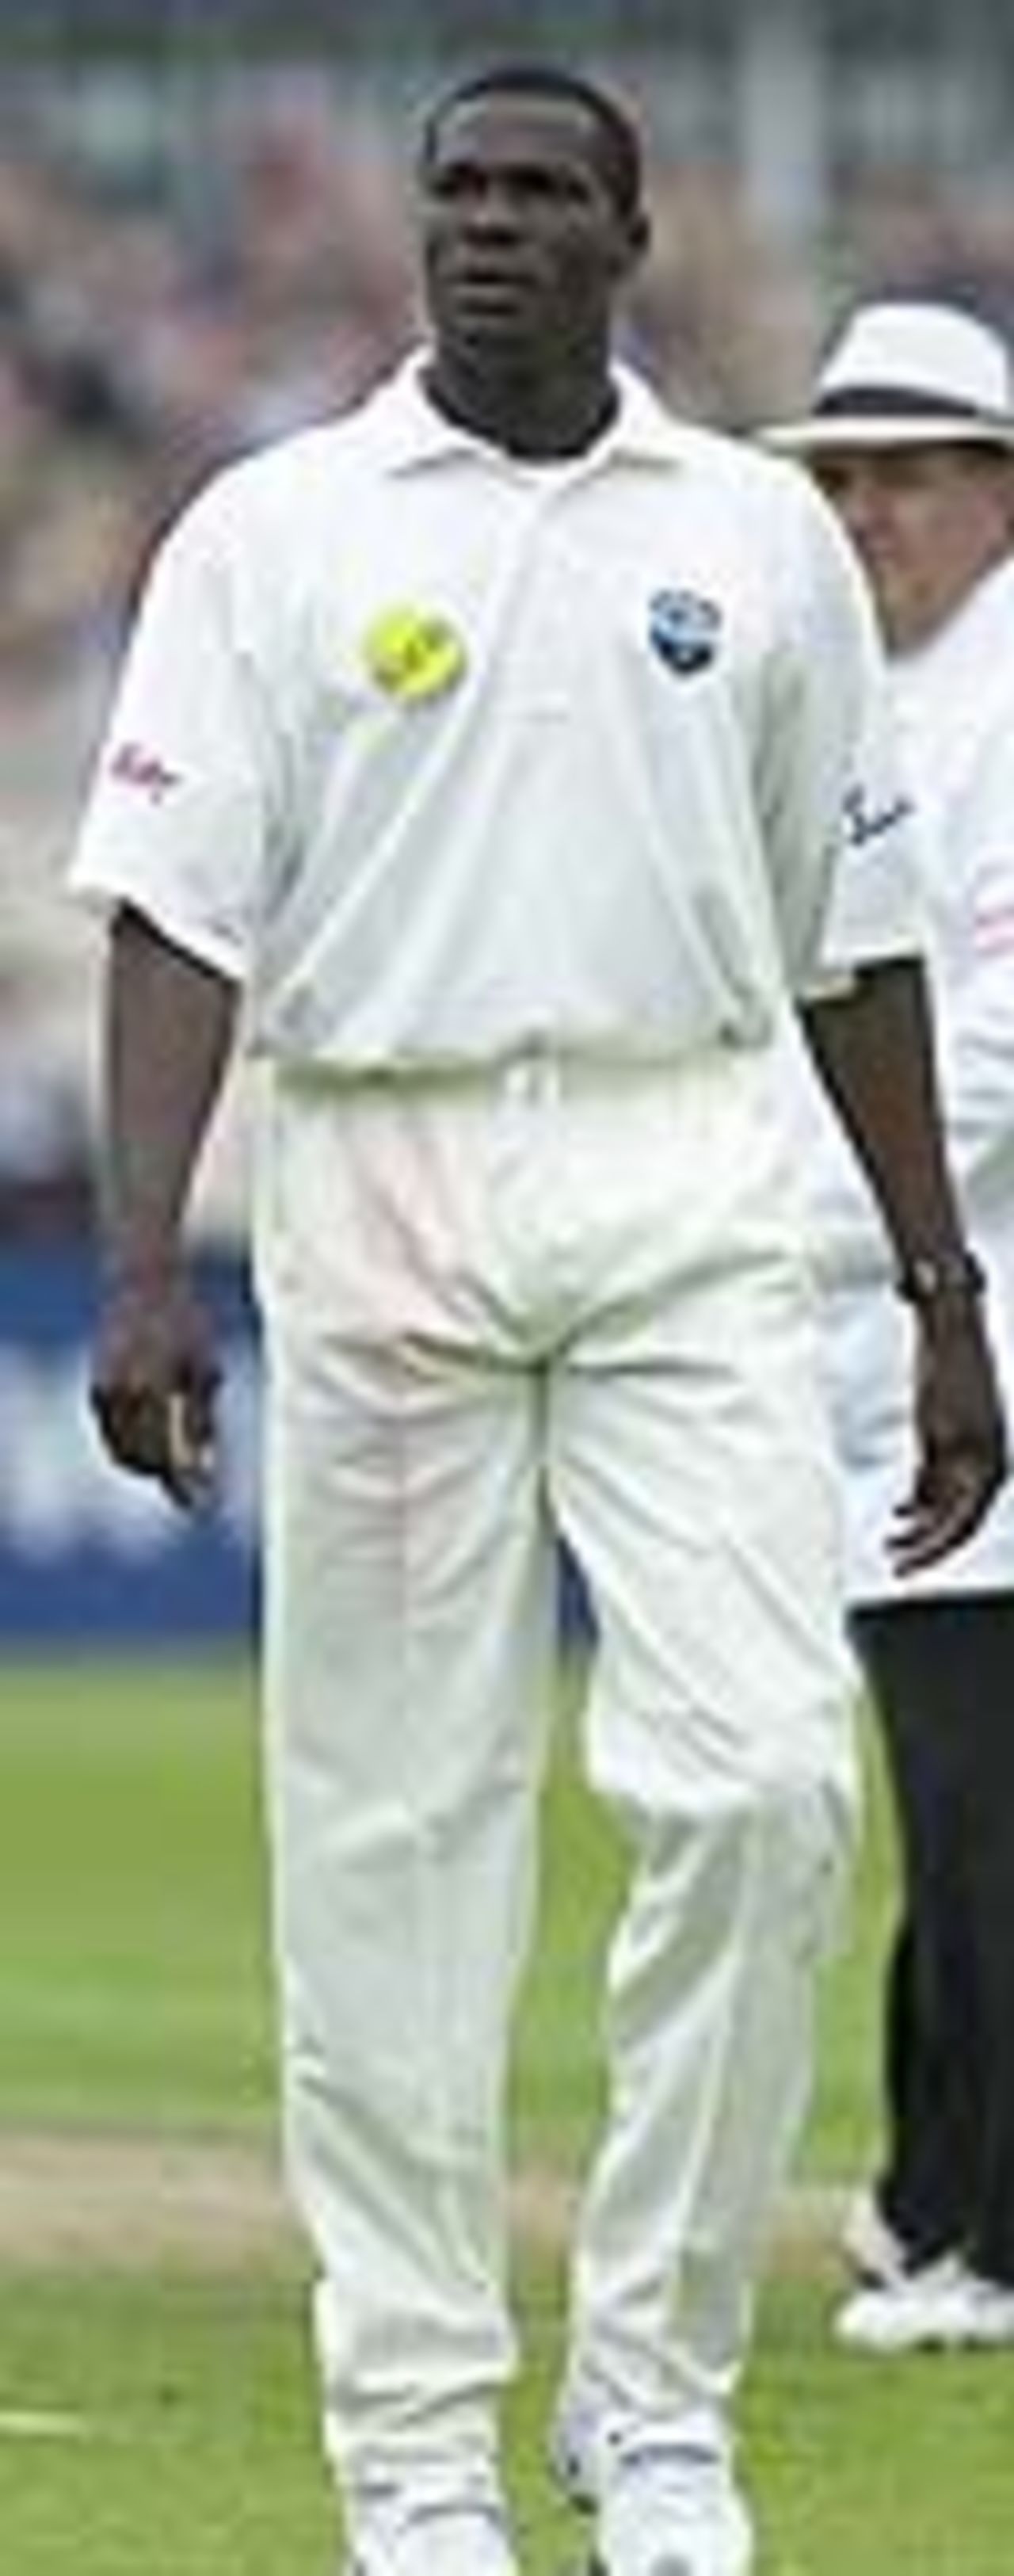 Taken on the 2000 West Indies tour to England